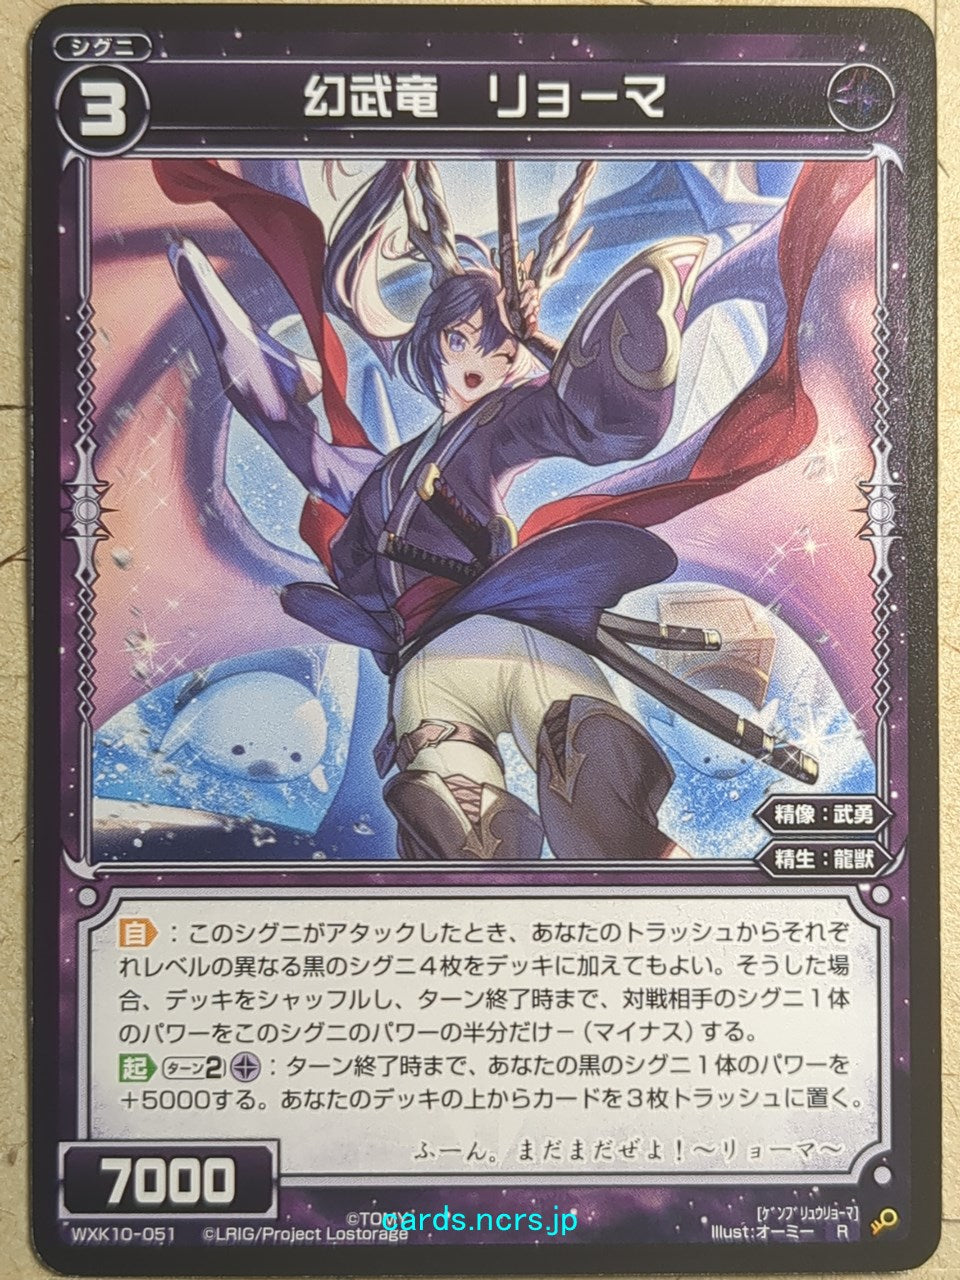 Wixoss Black Wixoss -Ryoma-  Phantom Brave Dragon Trading Card WXK10-051